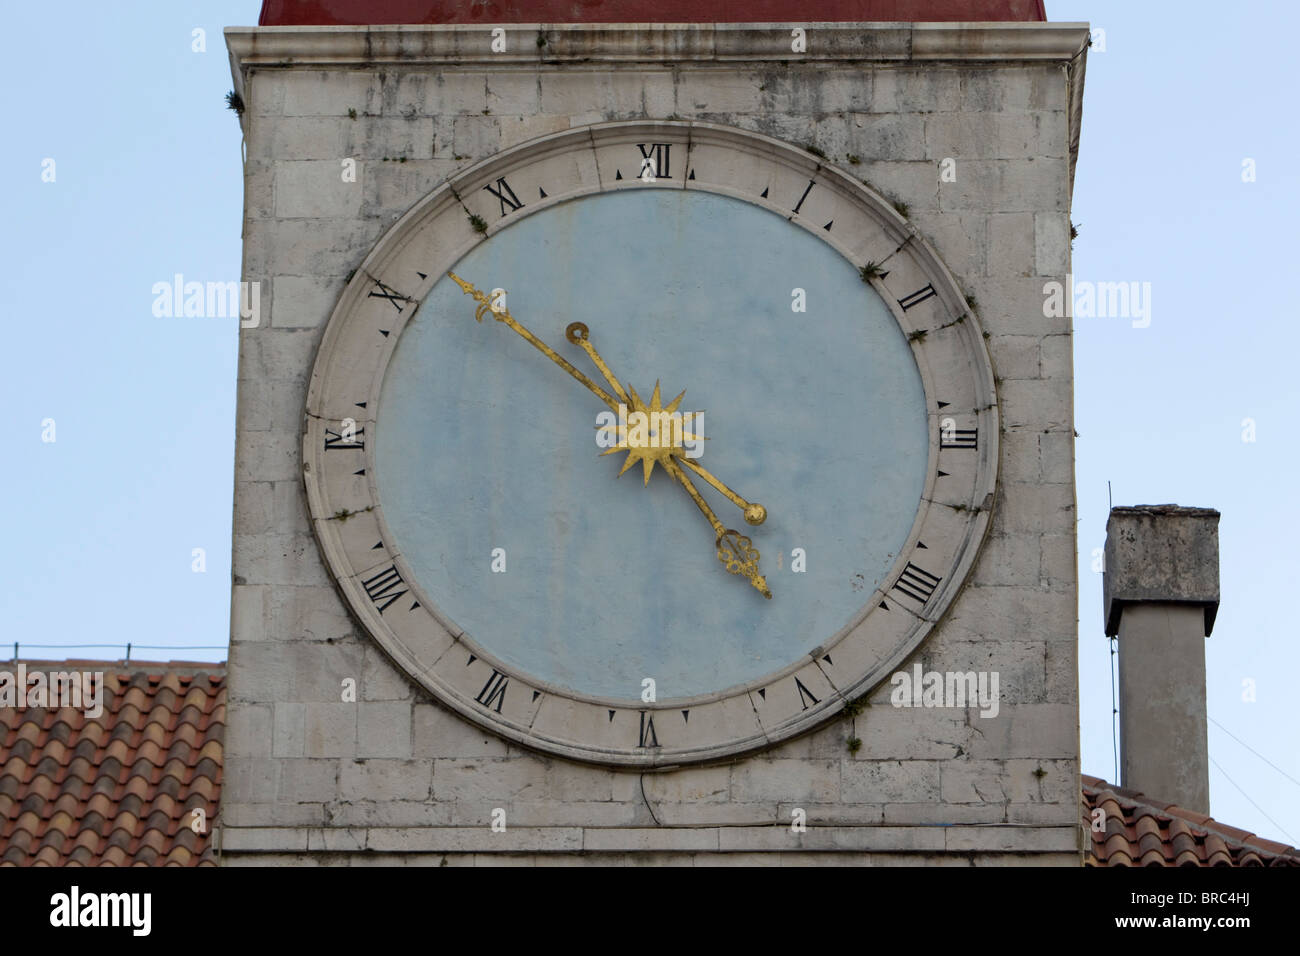 A clock on a building in Trogir, Croatia Stock Photo